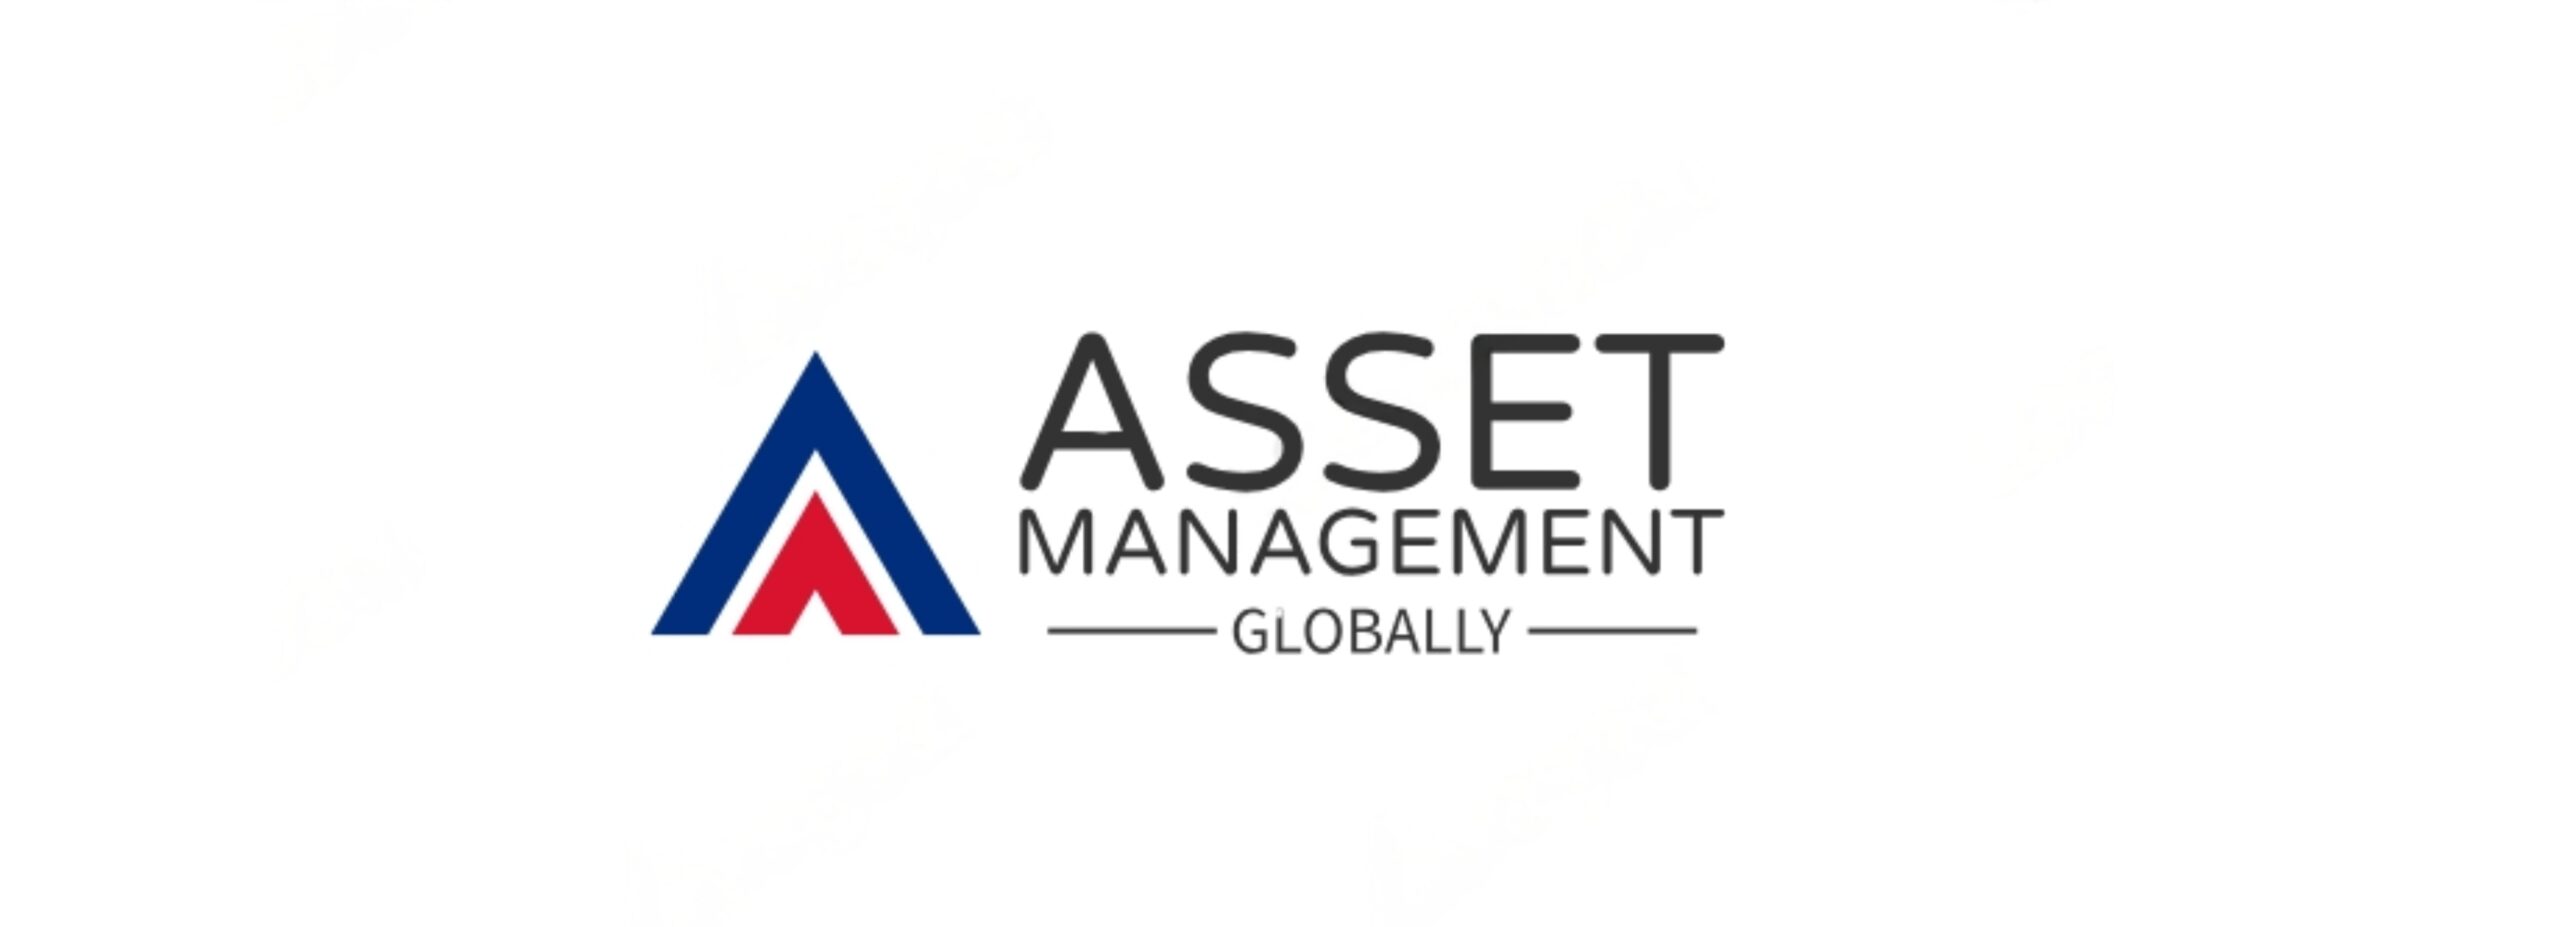 Asset Management Globally